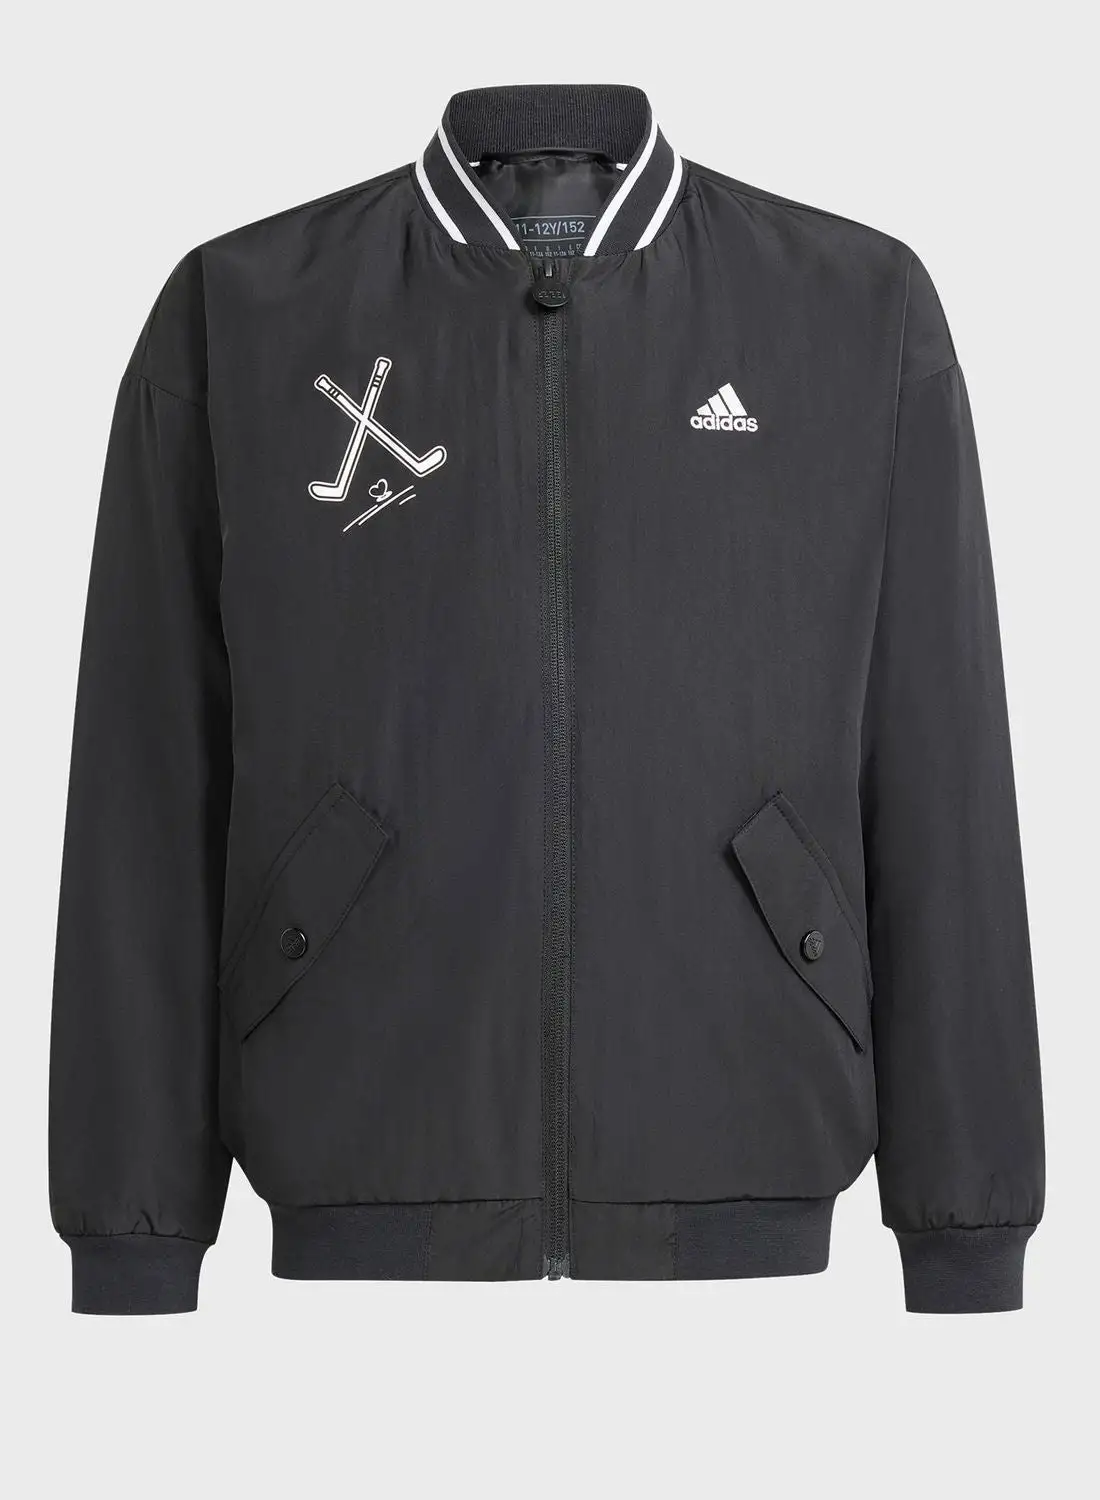 Adidas Kids Brand Love Woven Jacket